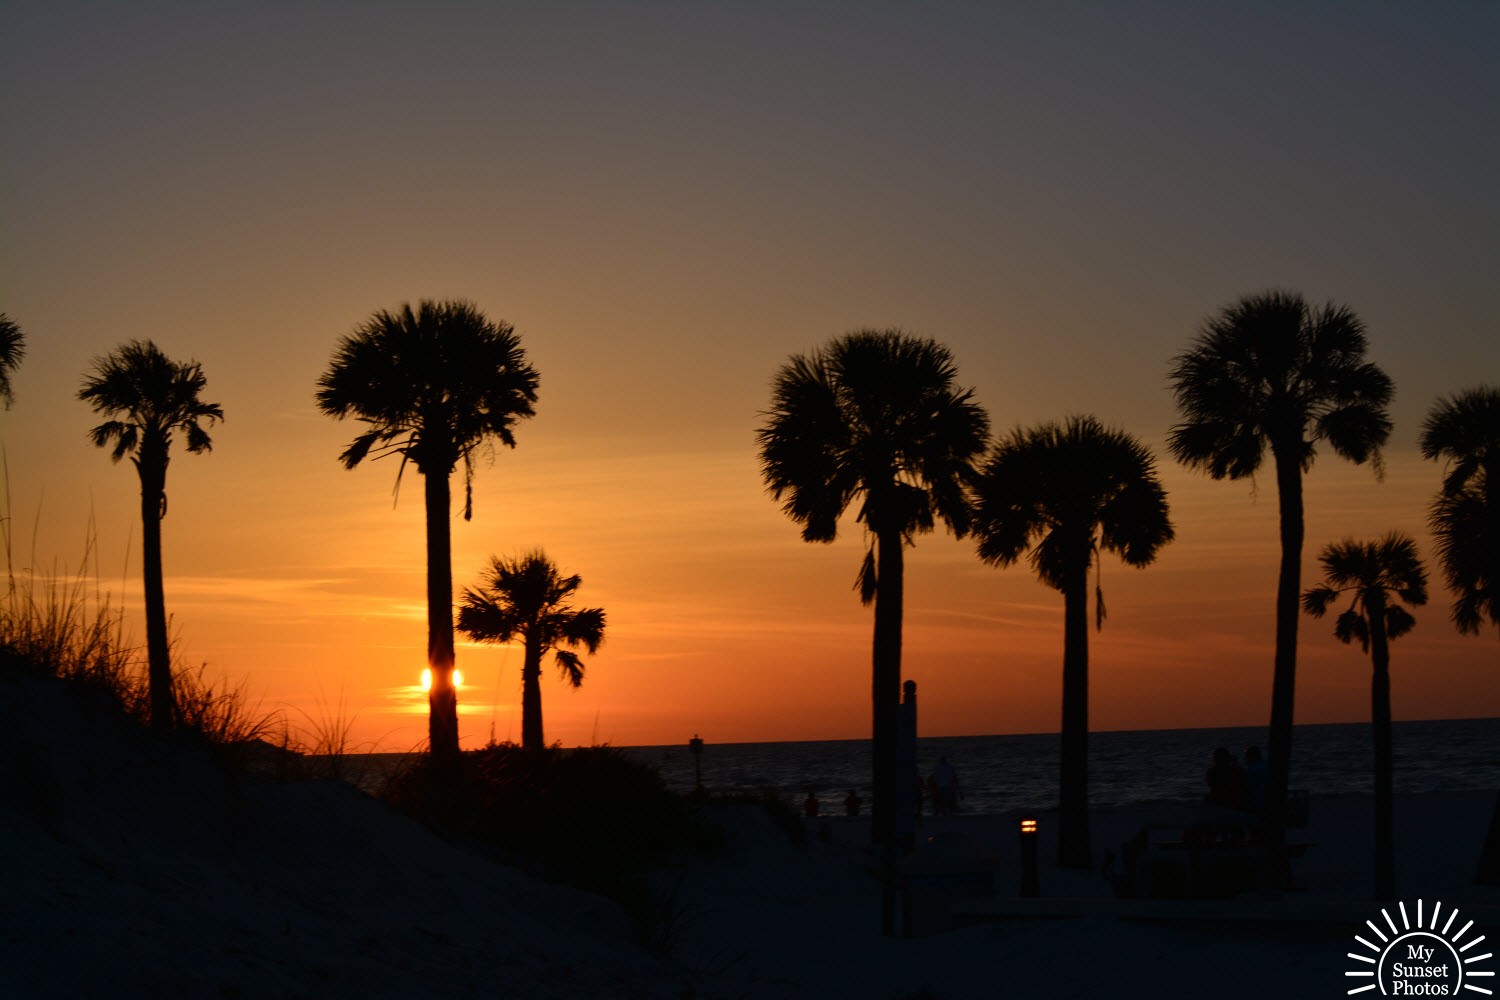 My Sunset Photos Blog Archive Palm Tree Sunset sun at